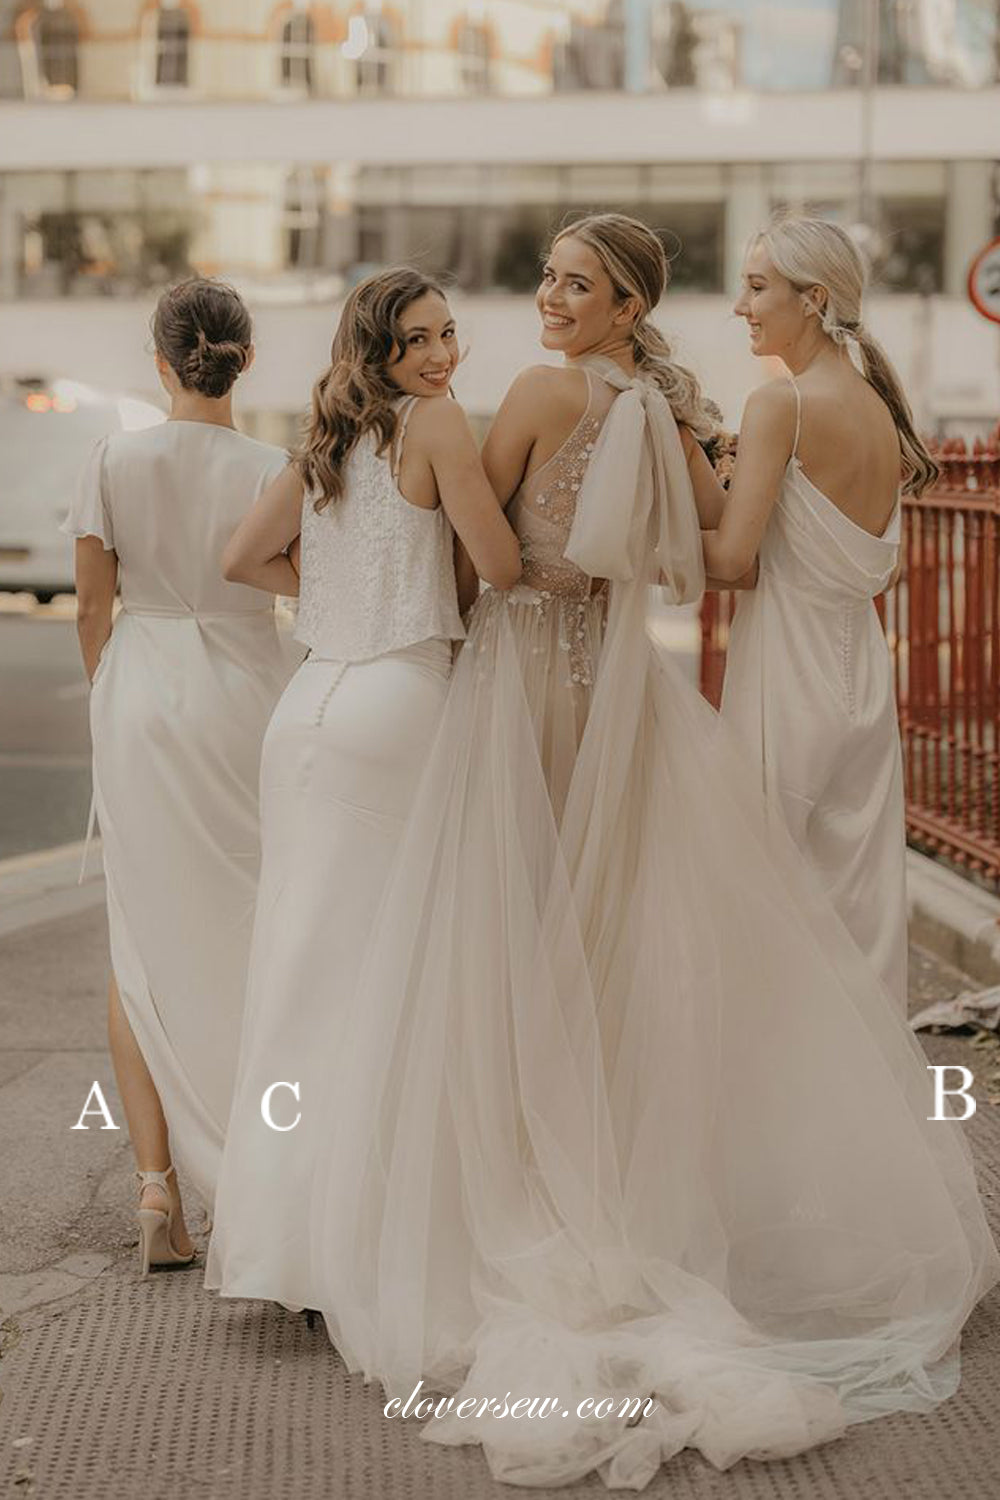 How long should a floor-length bridesmaid dress be? - Quora